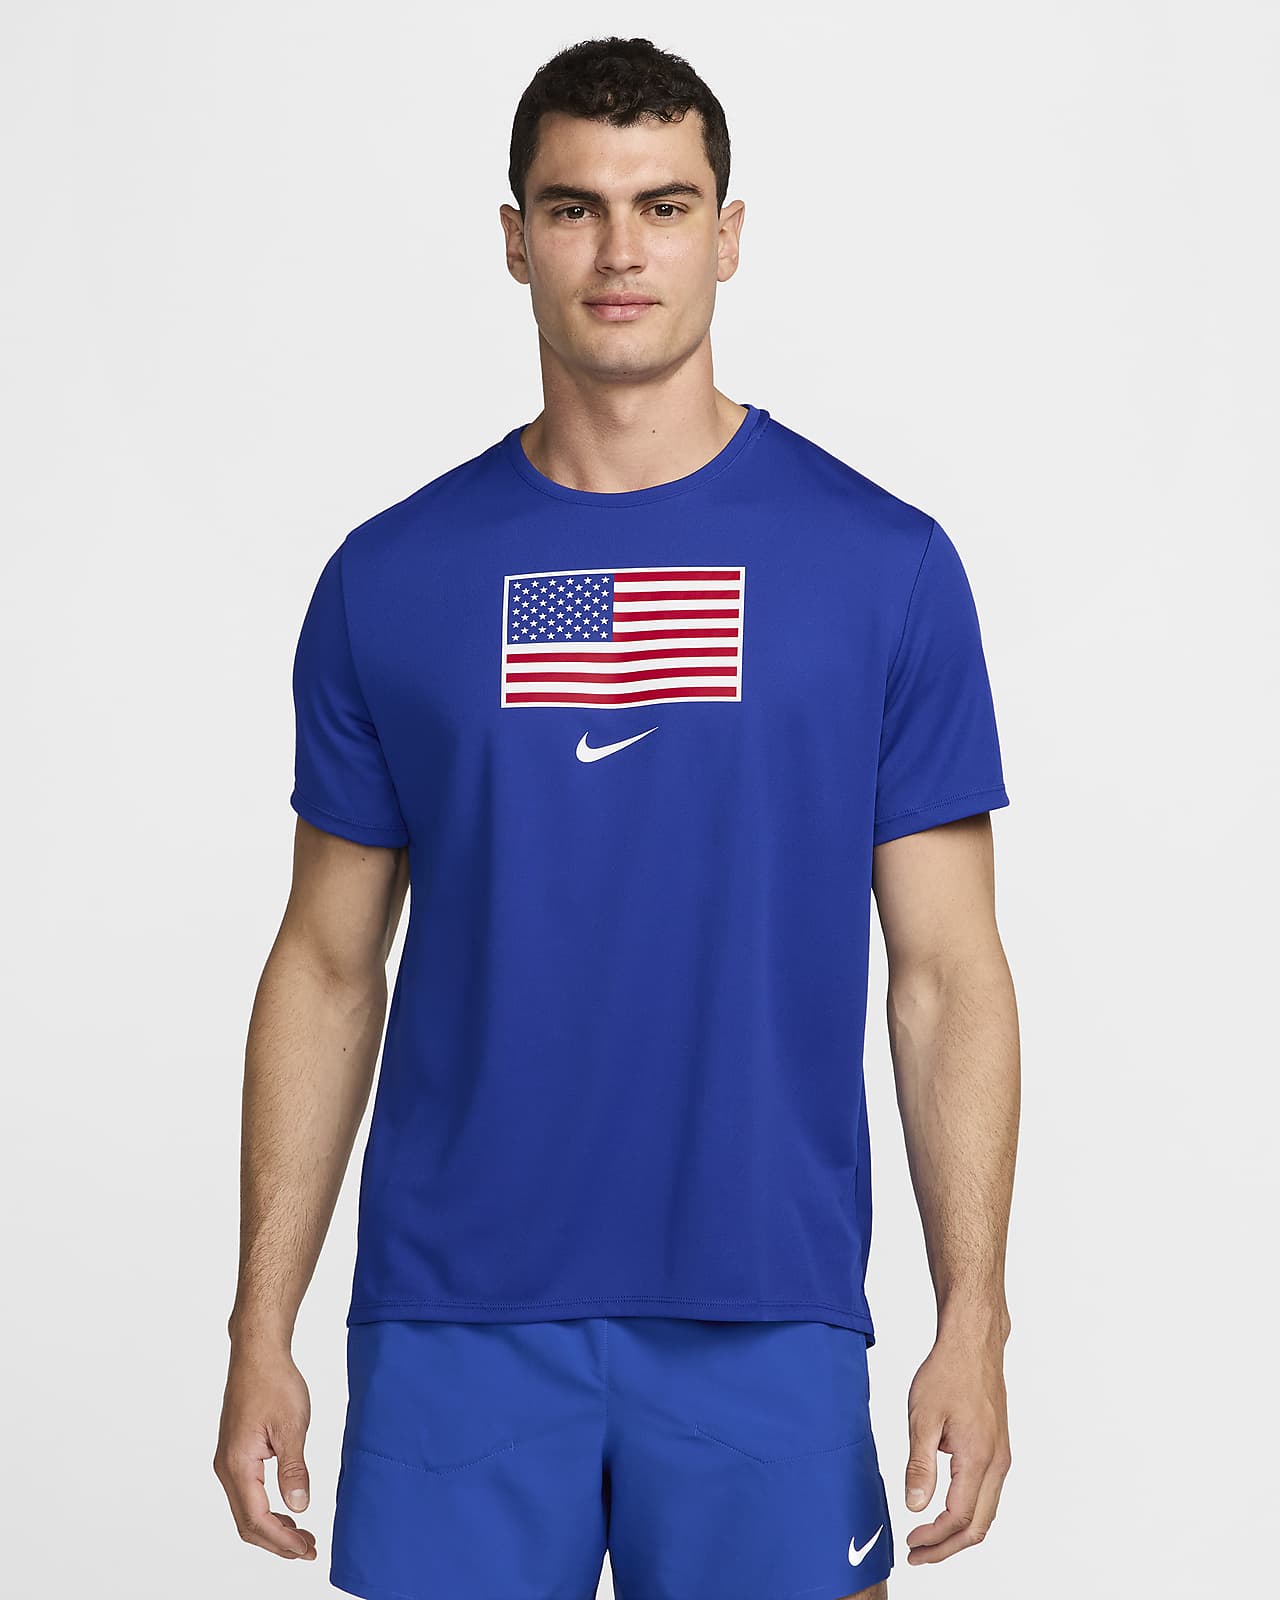 USA Miler Men's Nike Dri-FIT Short-Sleeve Running Top